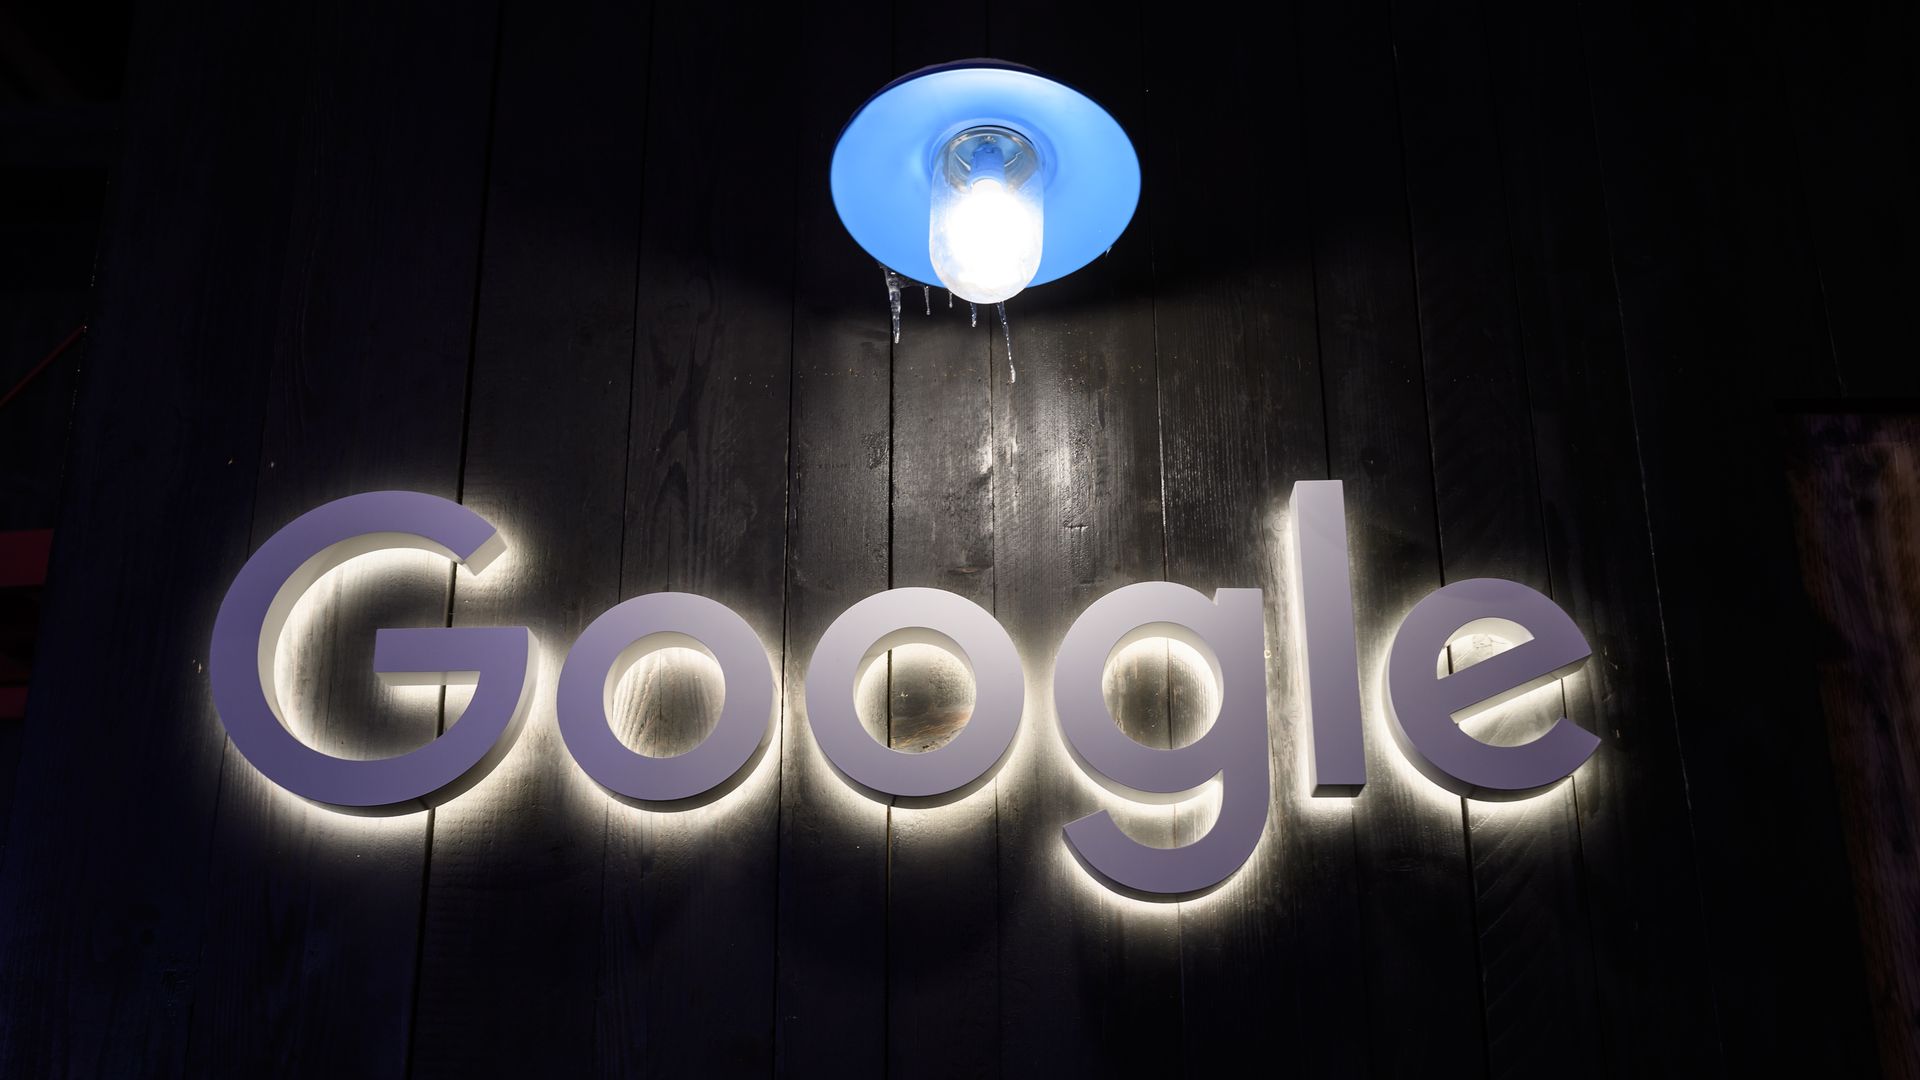 The Google logo appears illuminated.